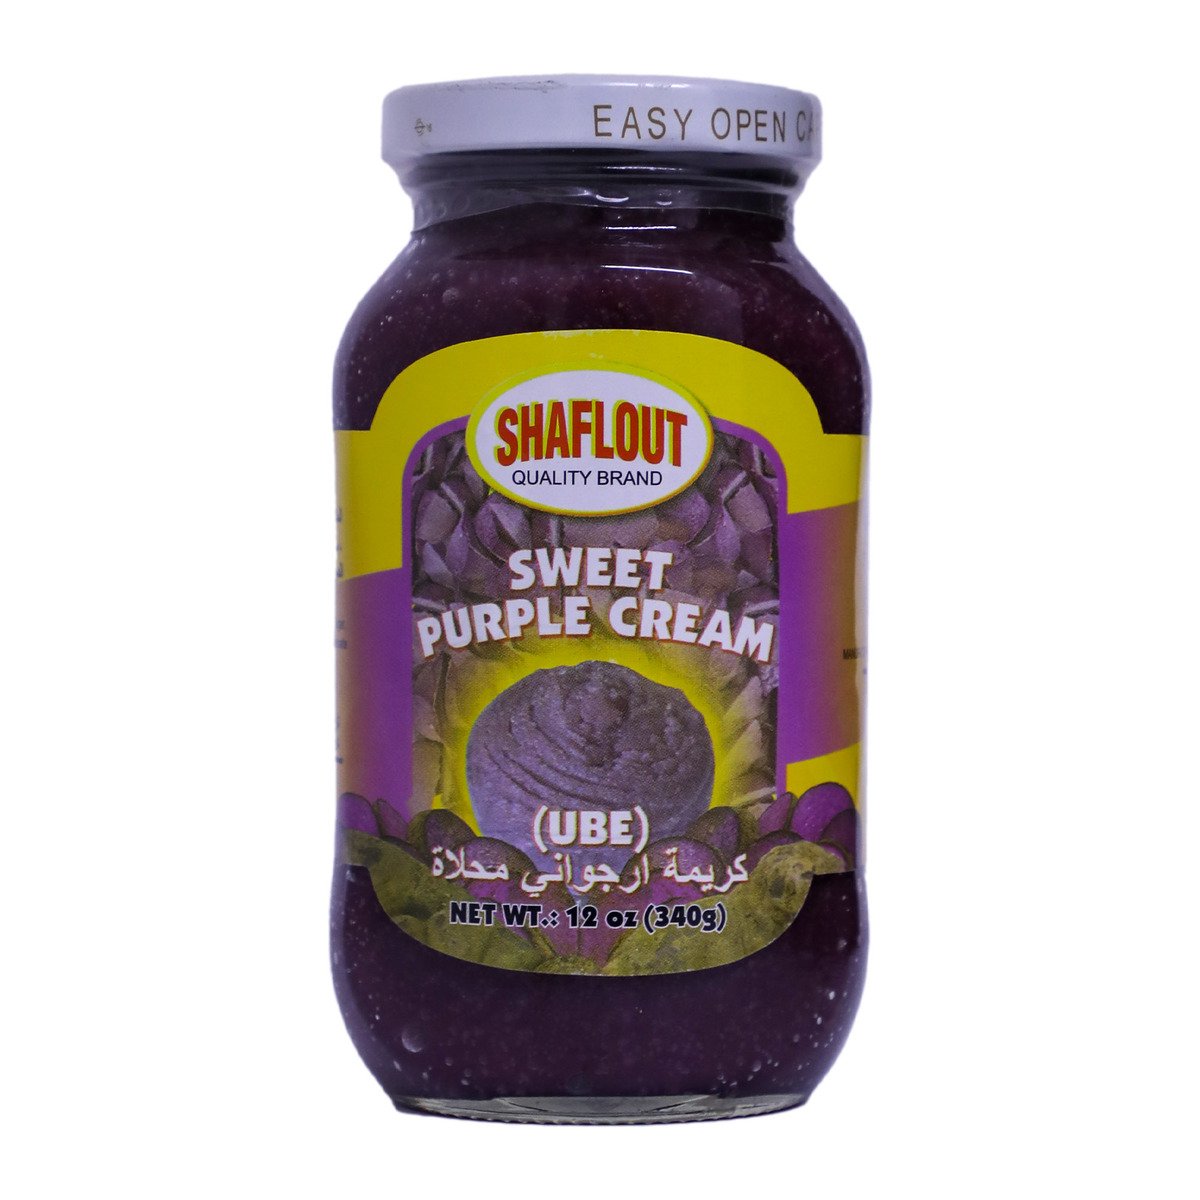 Shaflout Sweet Purple Cream Ube 340g